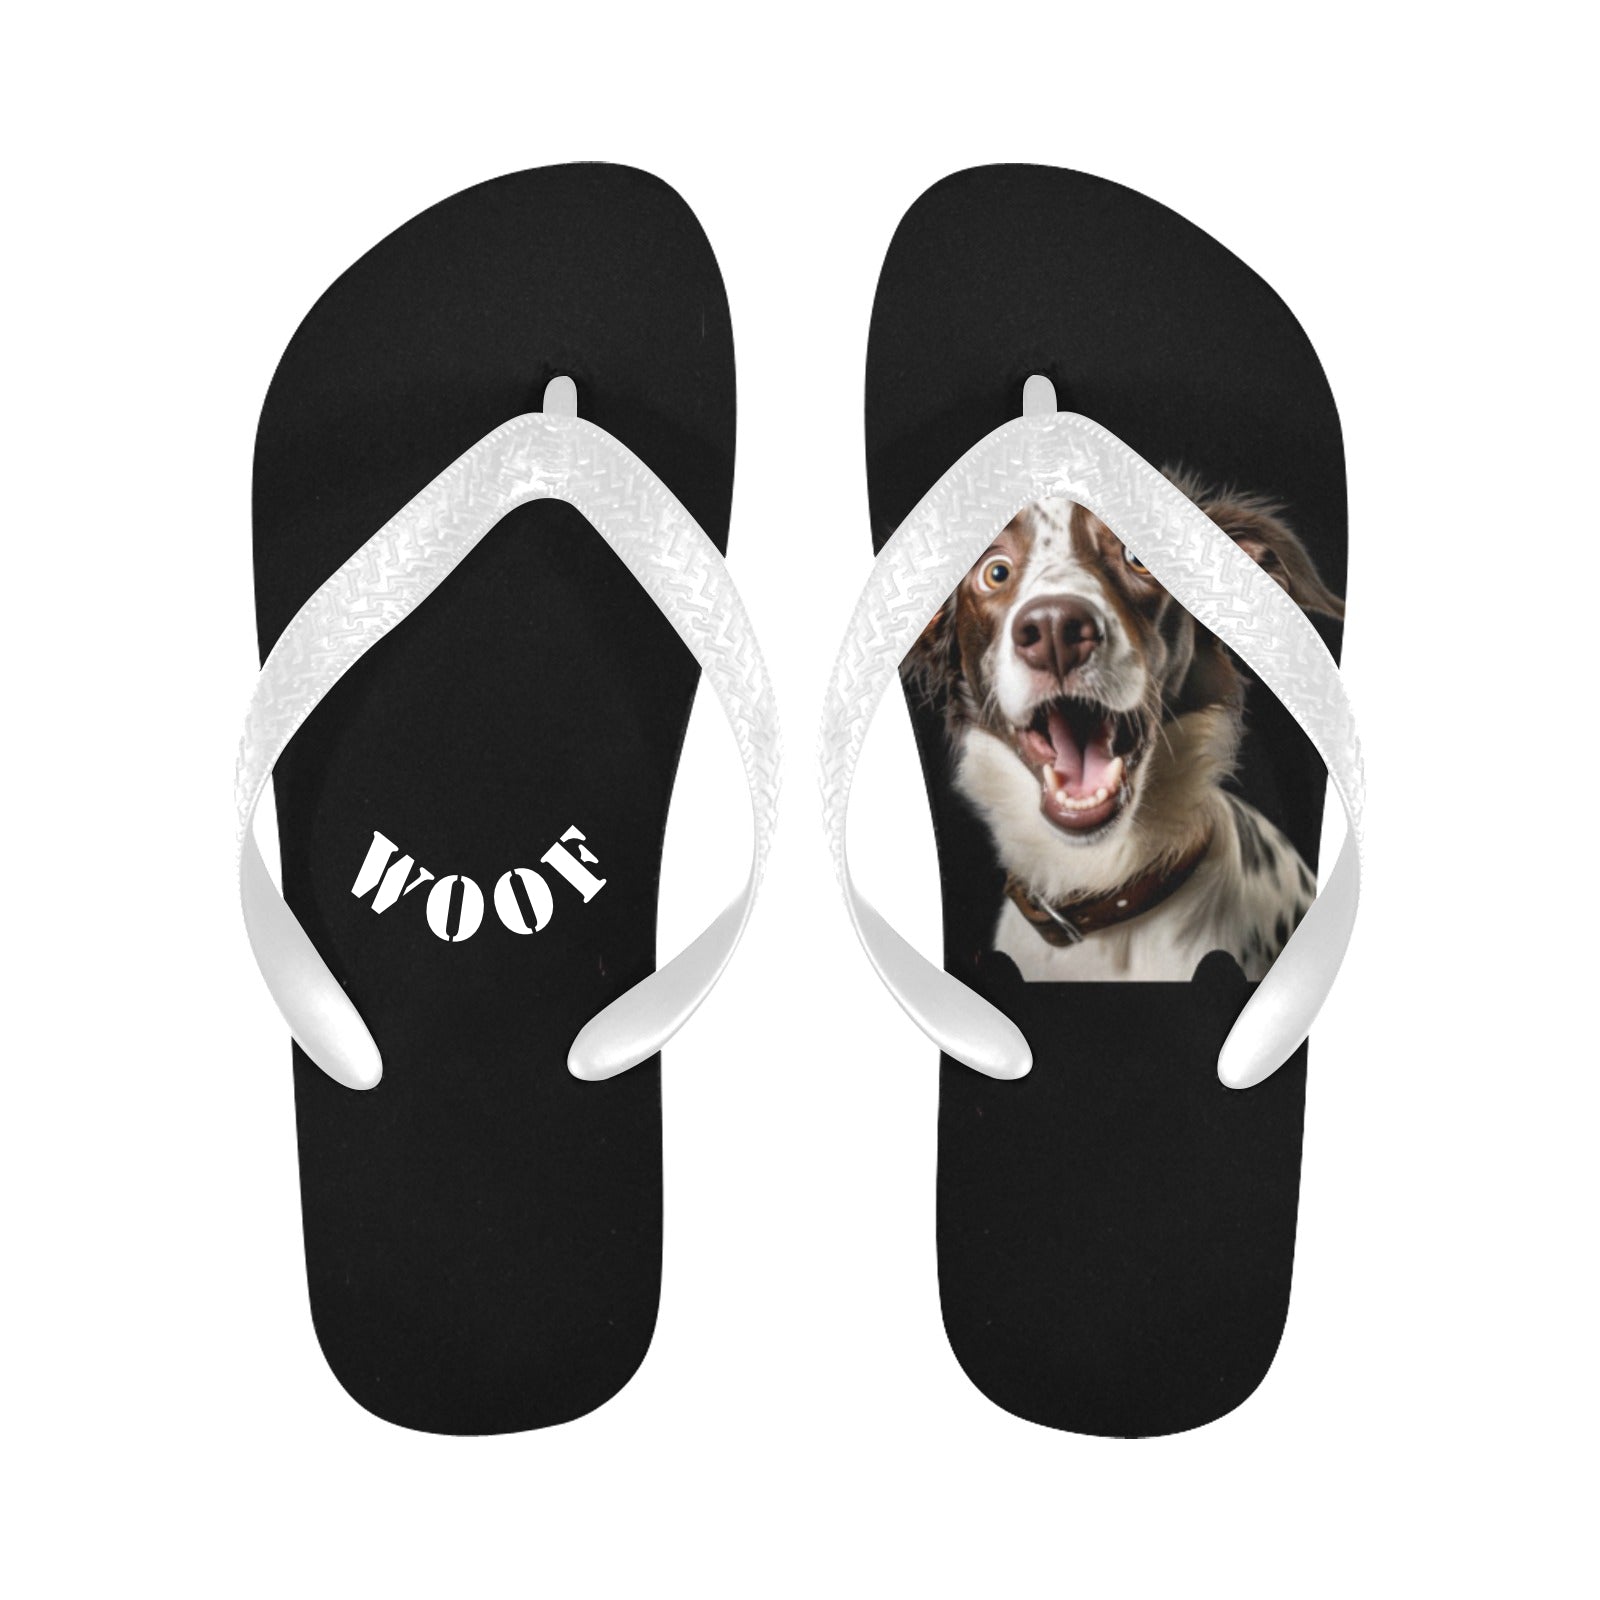 Personalized Flip-Flops designs